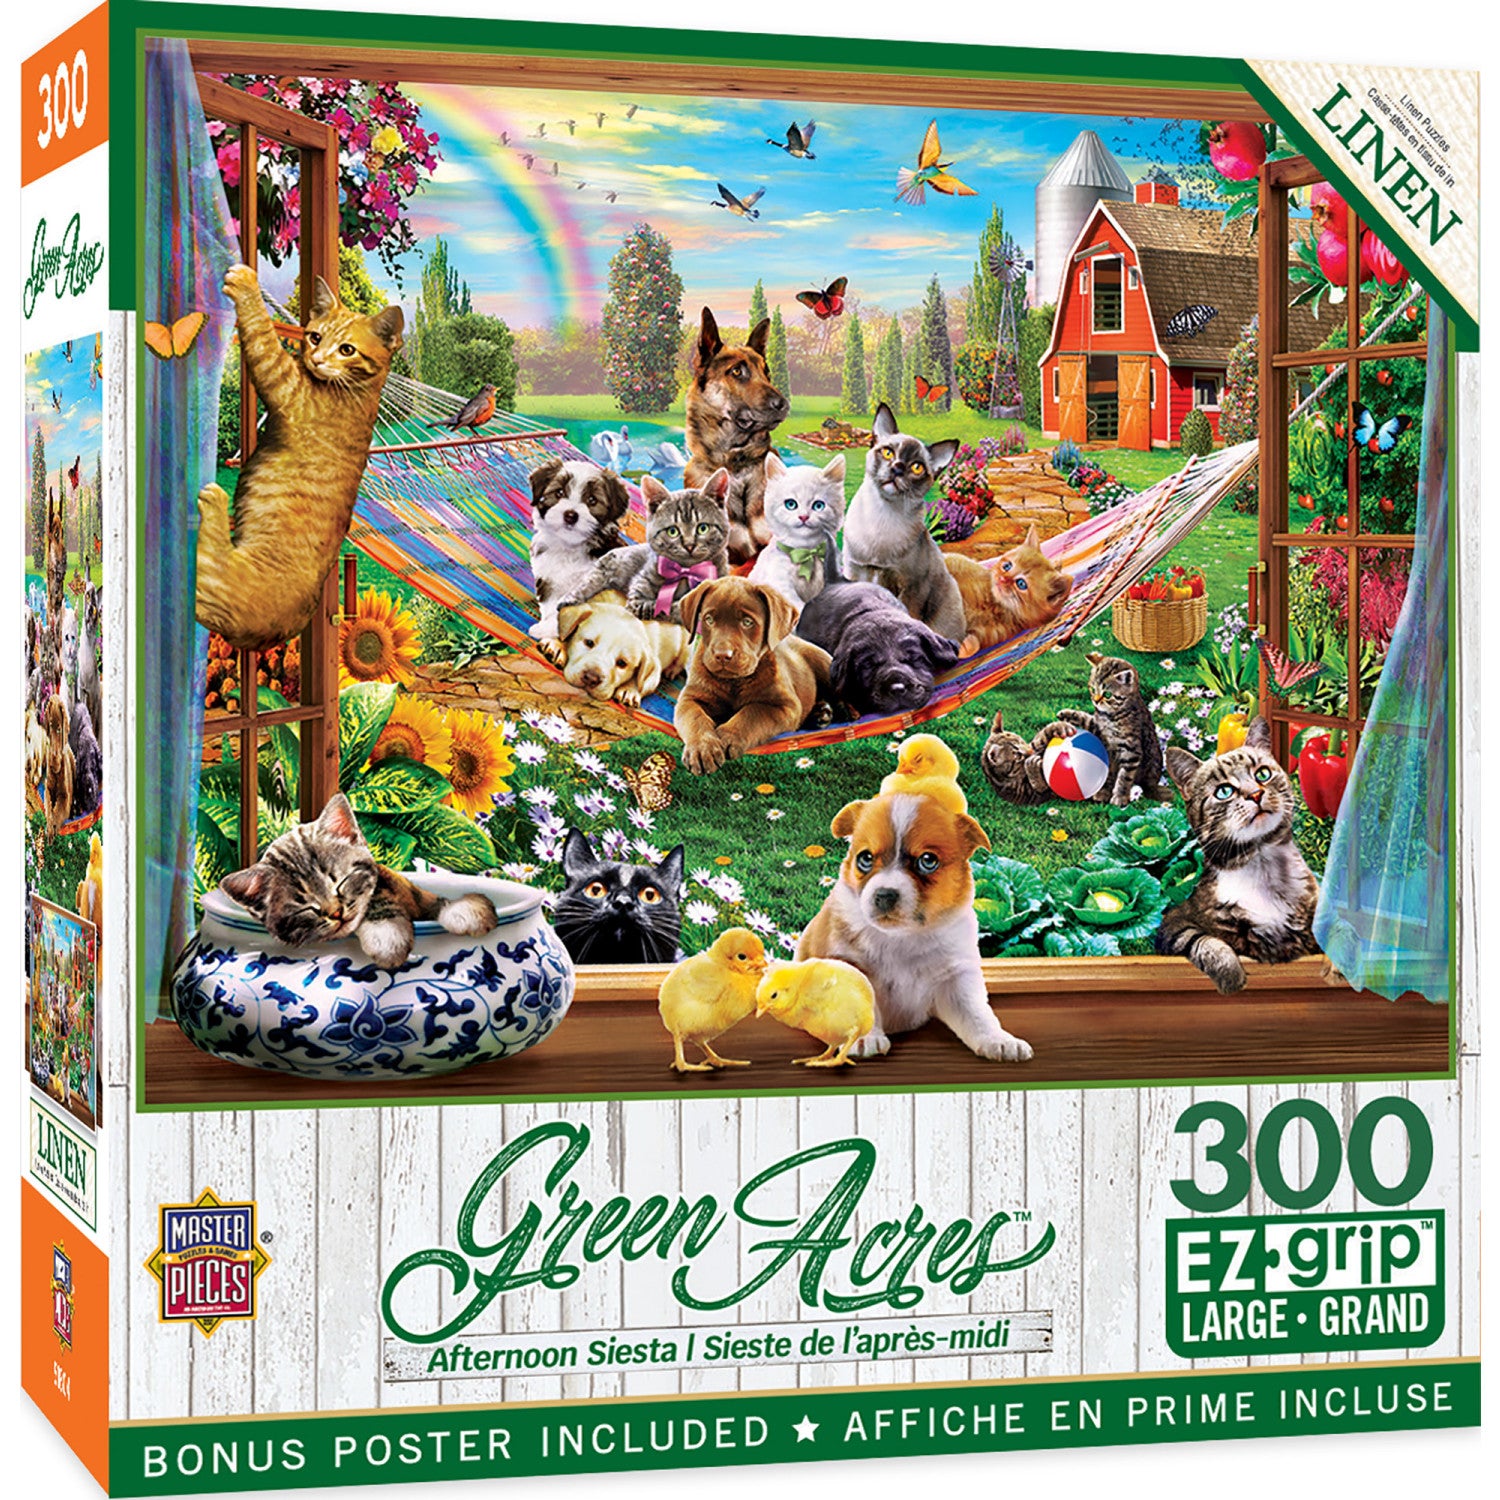 Green Acres - Afternoon Siesta 300 Piece EZ Grip Jigsaw Puzzle